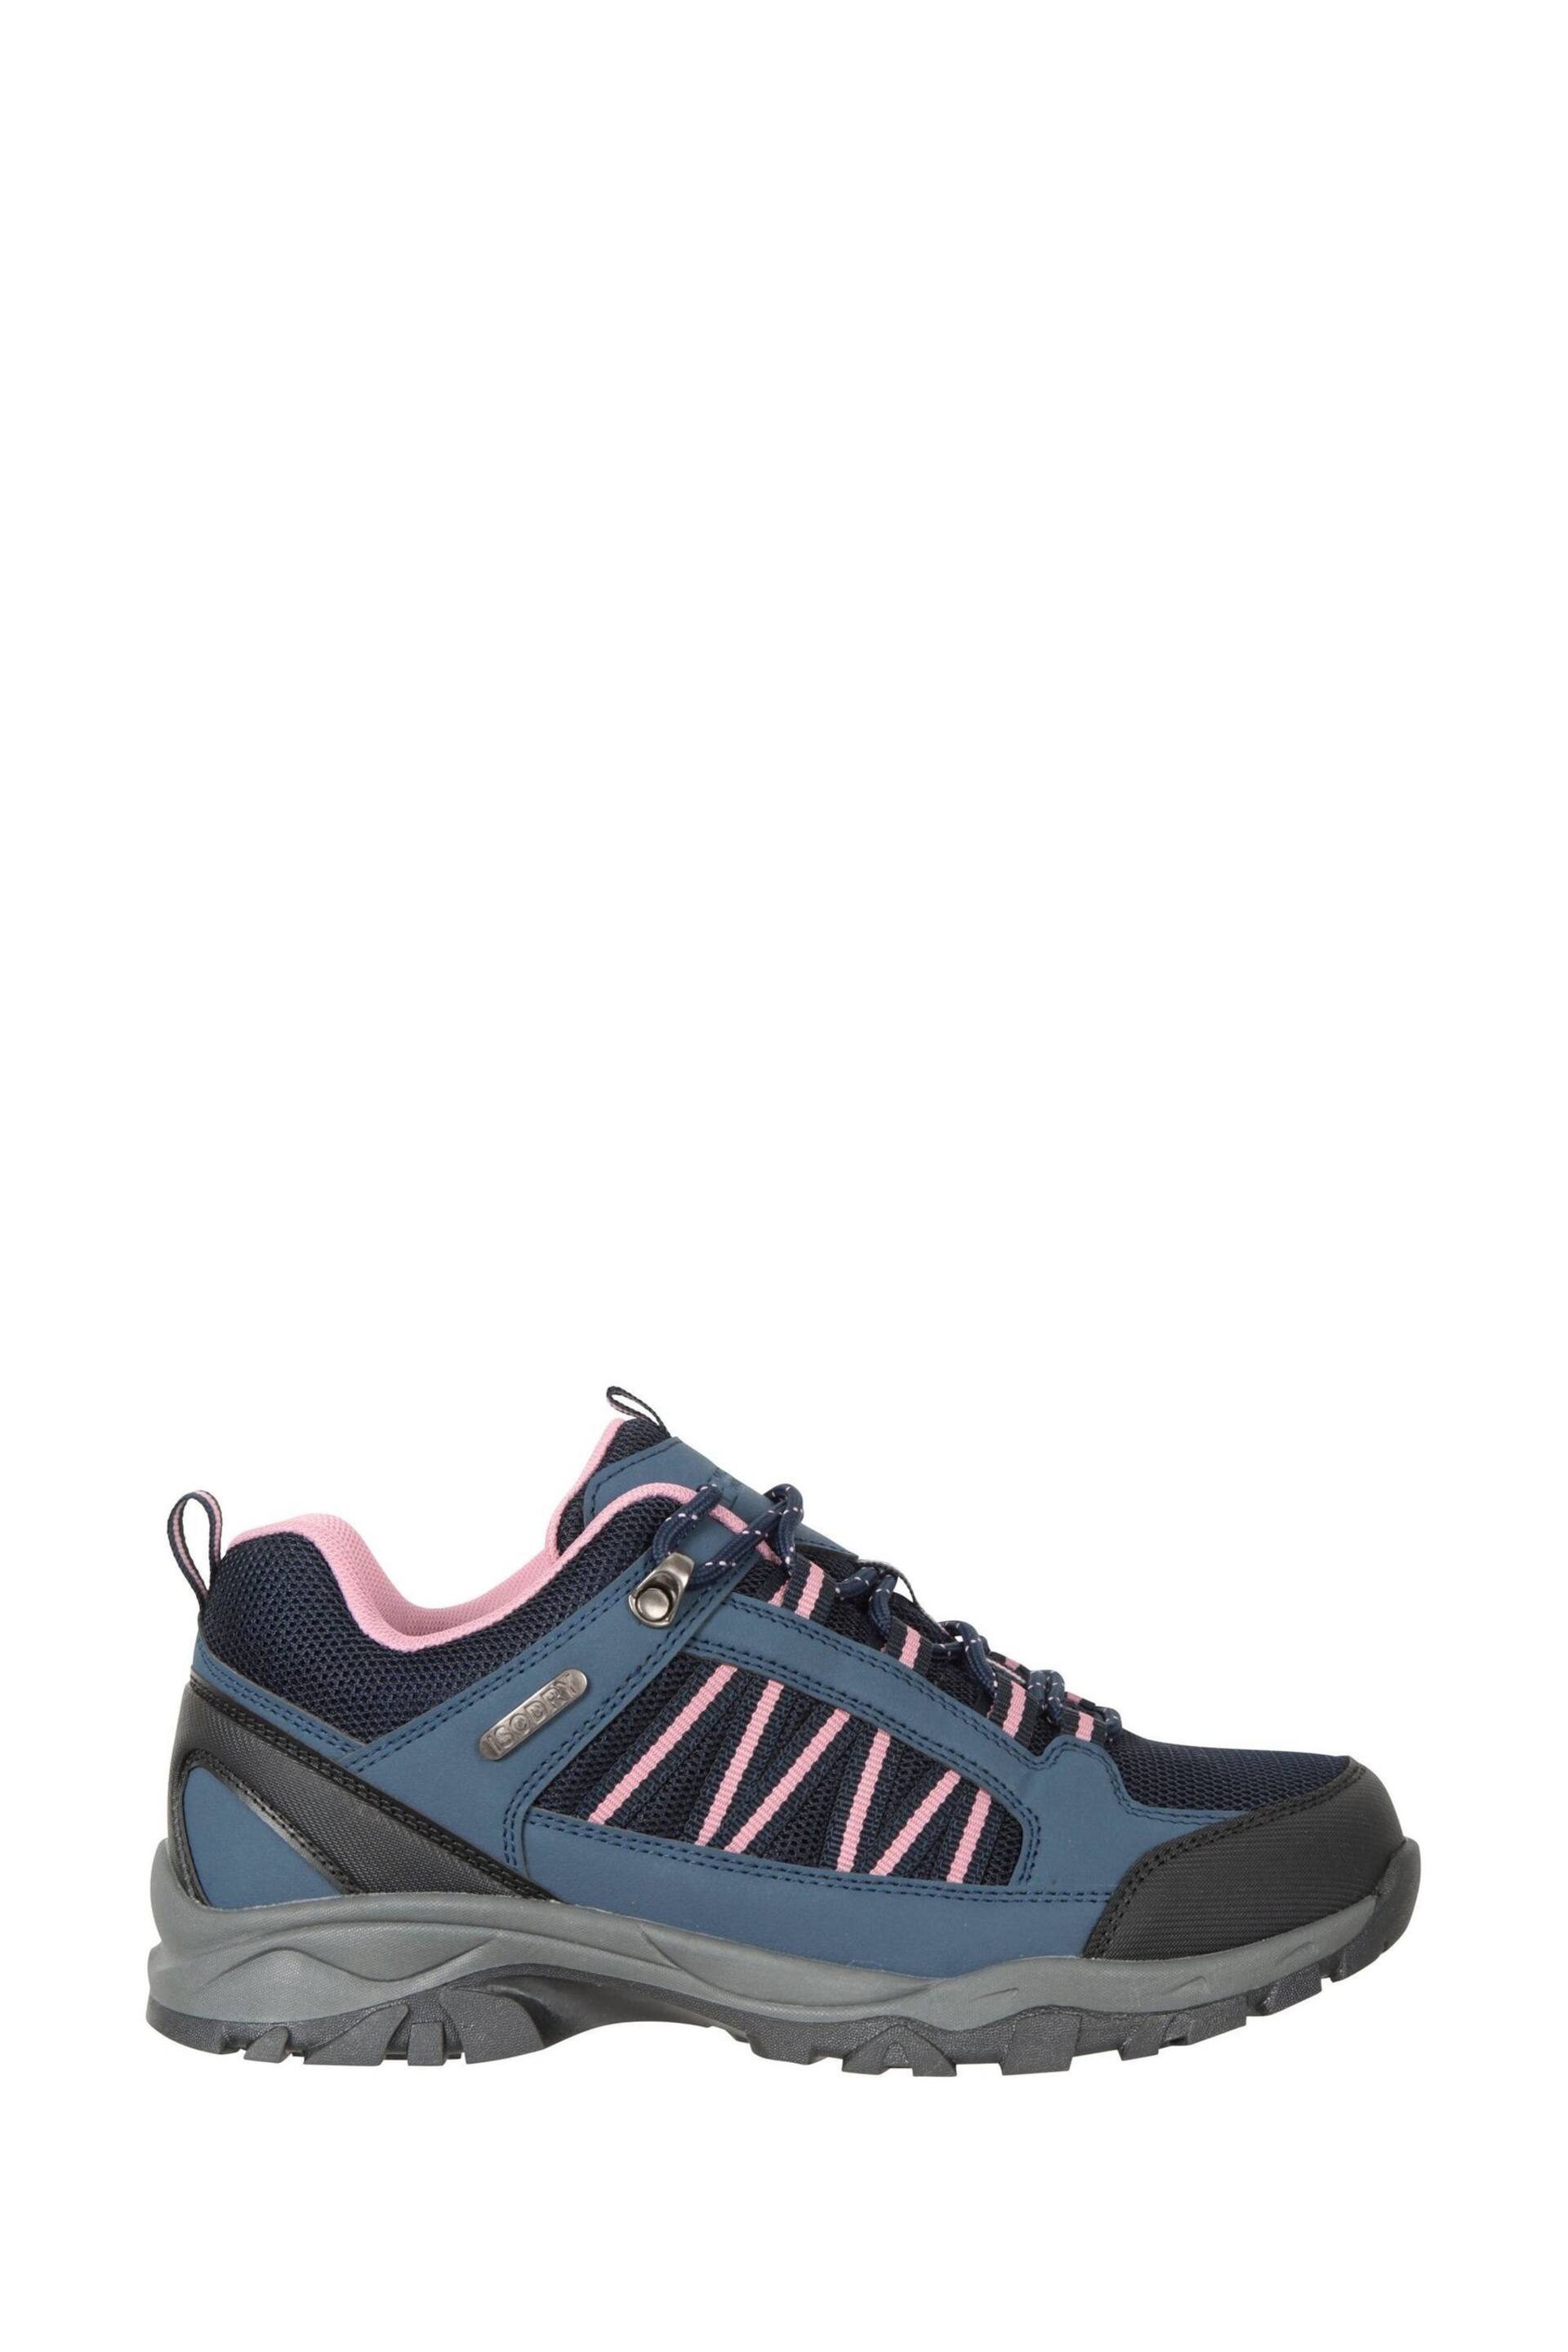 Mountain Warehouse Blue Path Waterproof Walking Shoes - Womens - Image 2 of 5